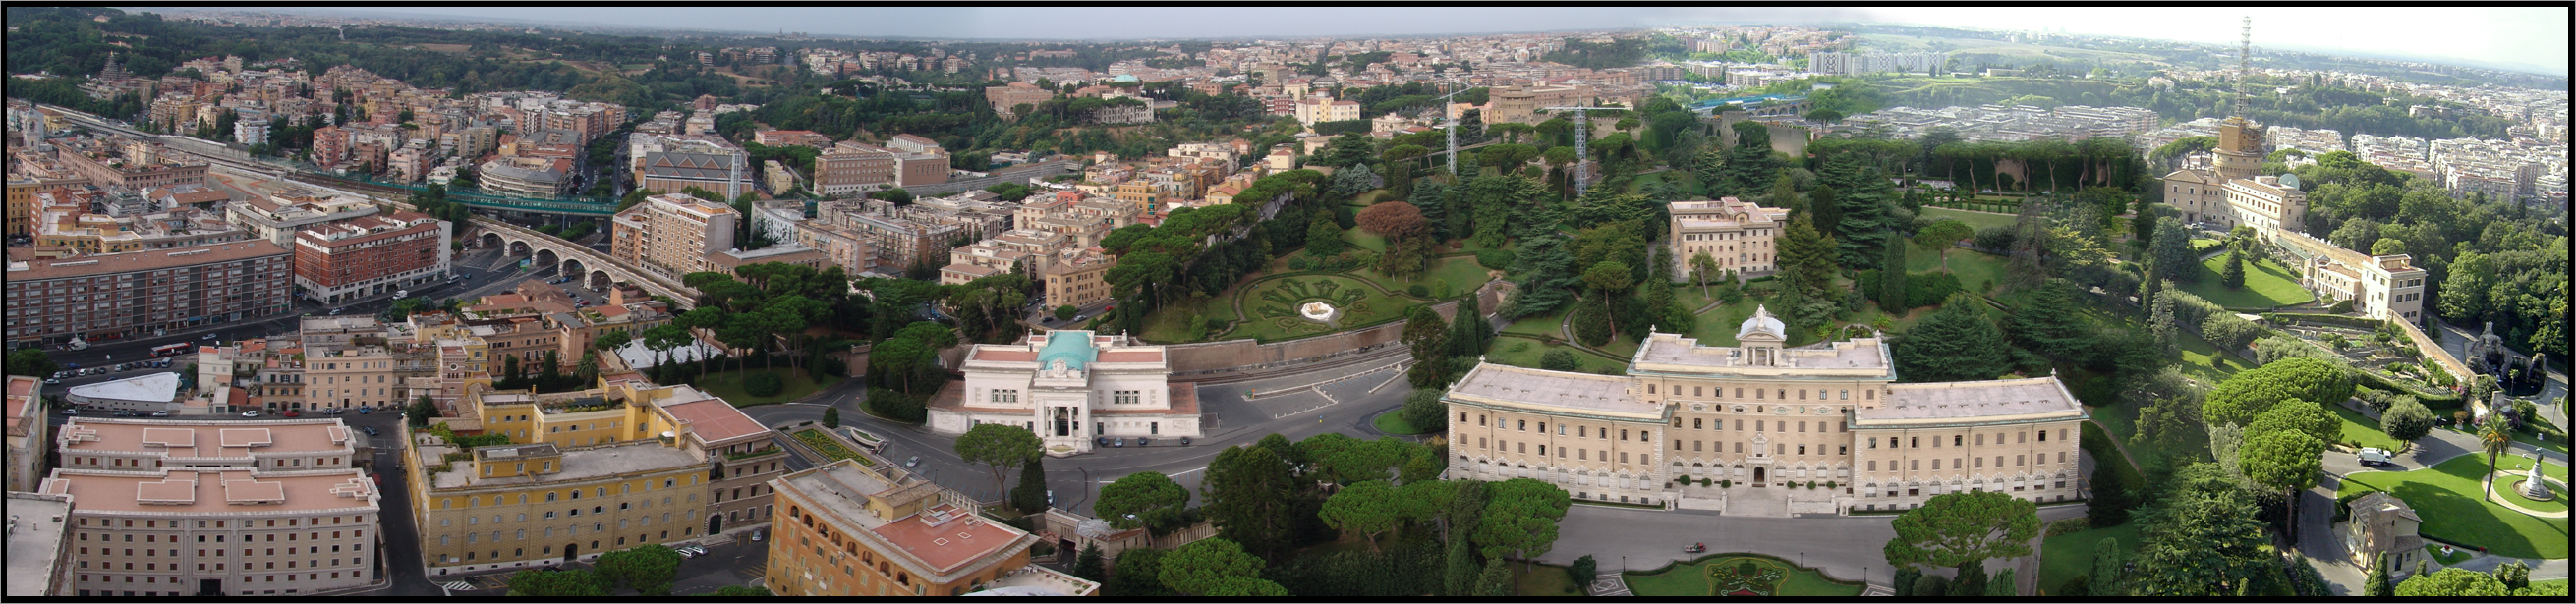 Les jardins du Vatican, Rome, Italie, Août 2006